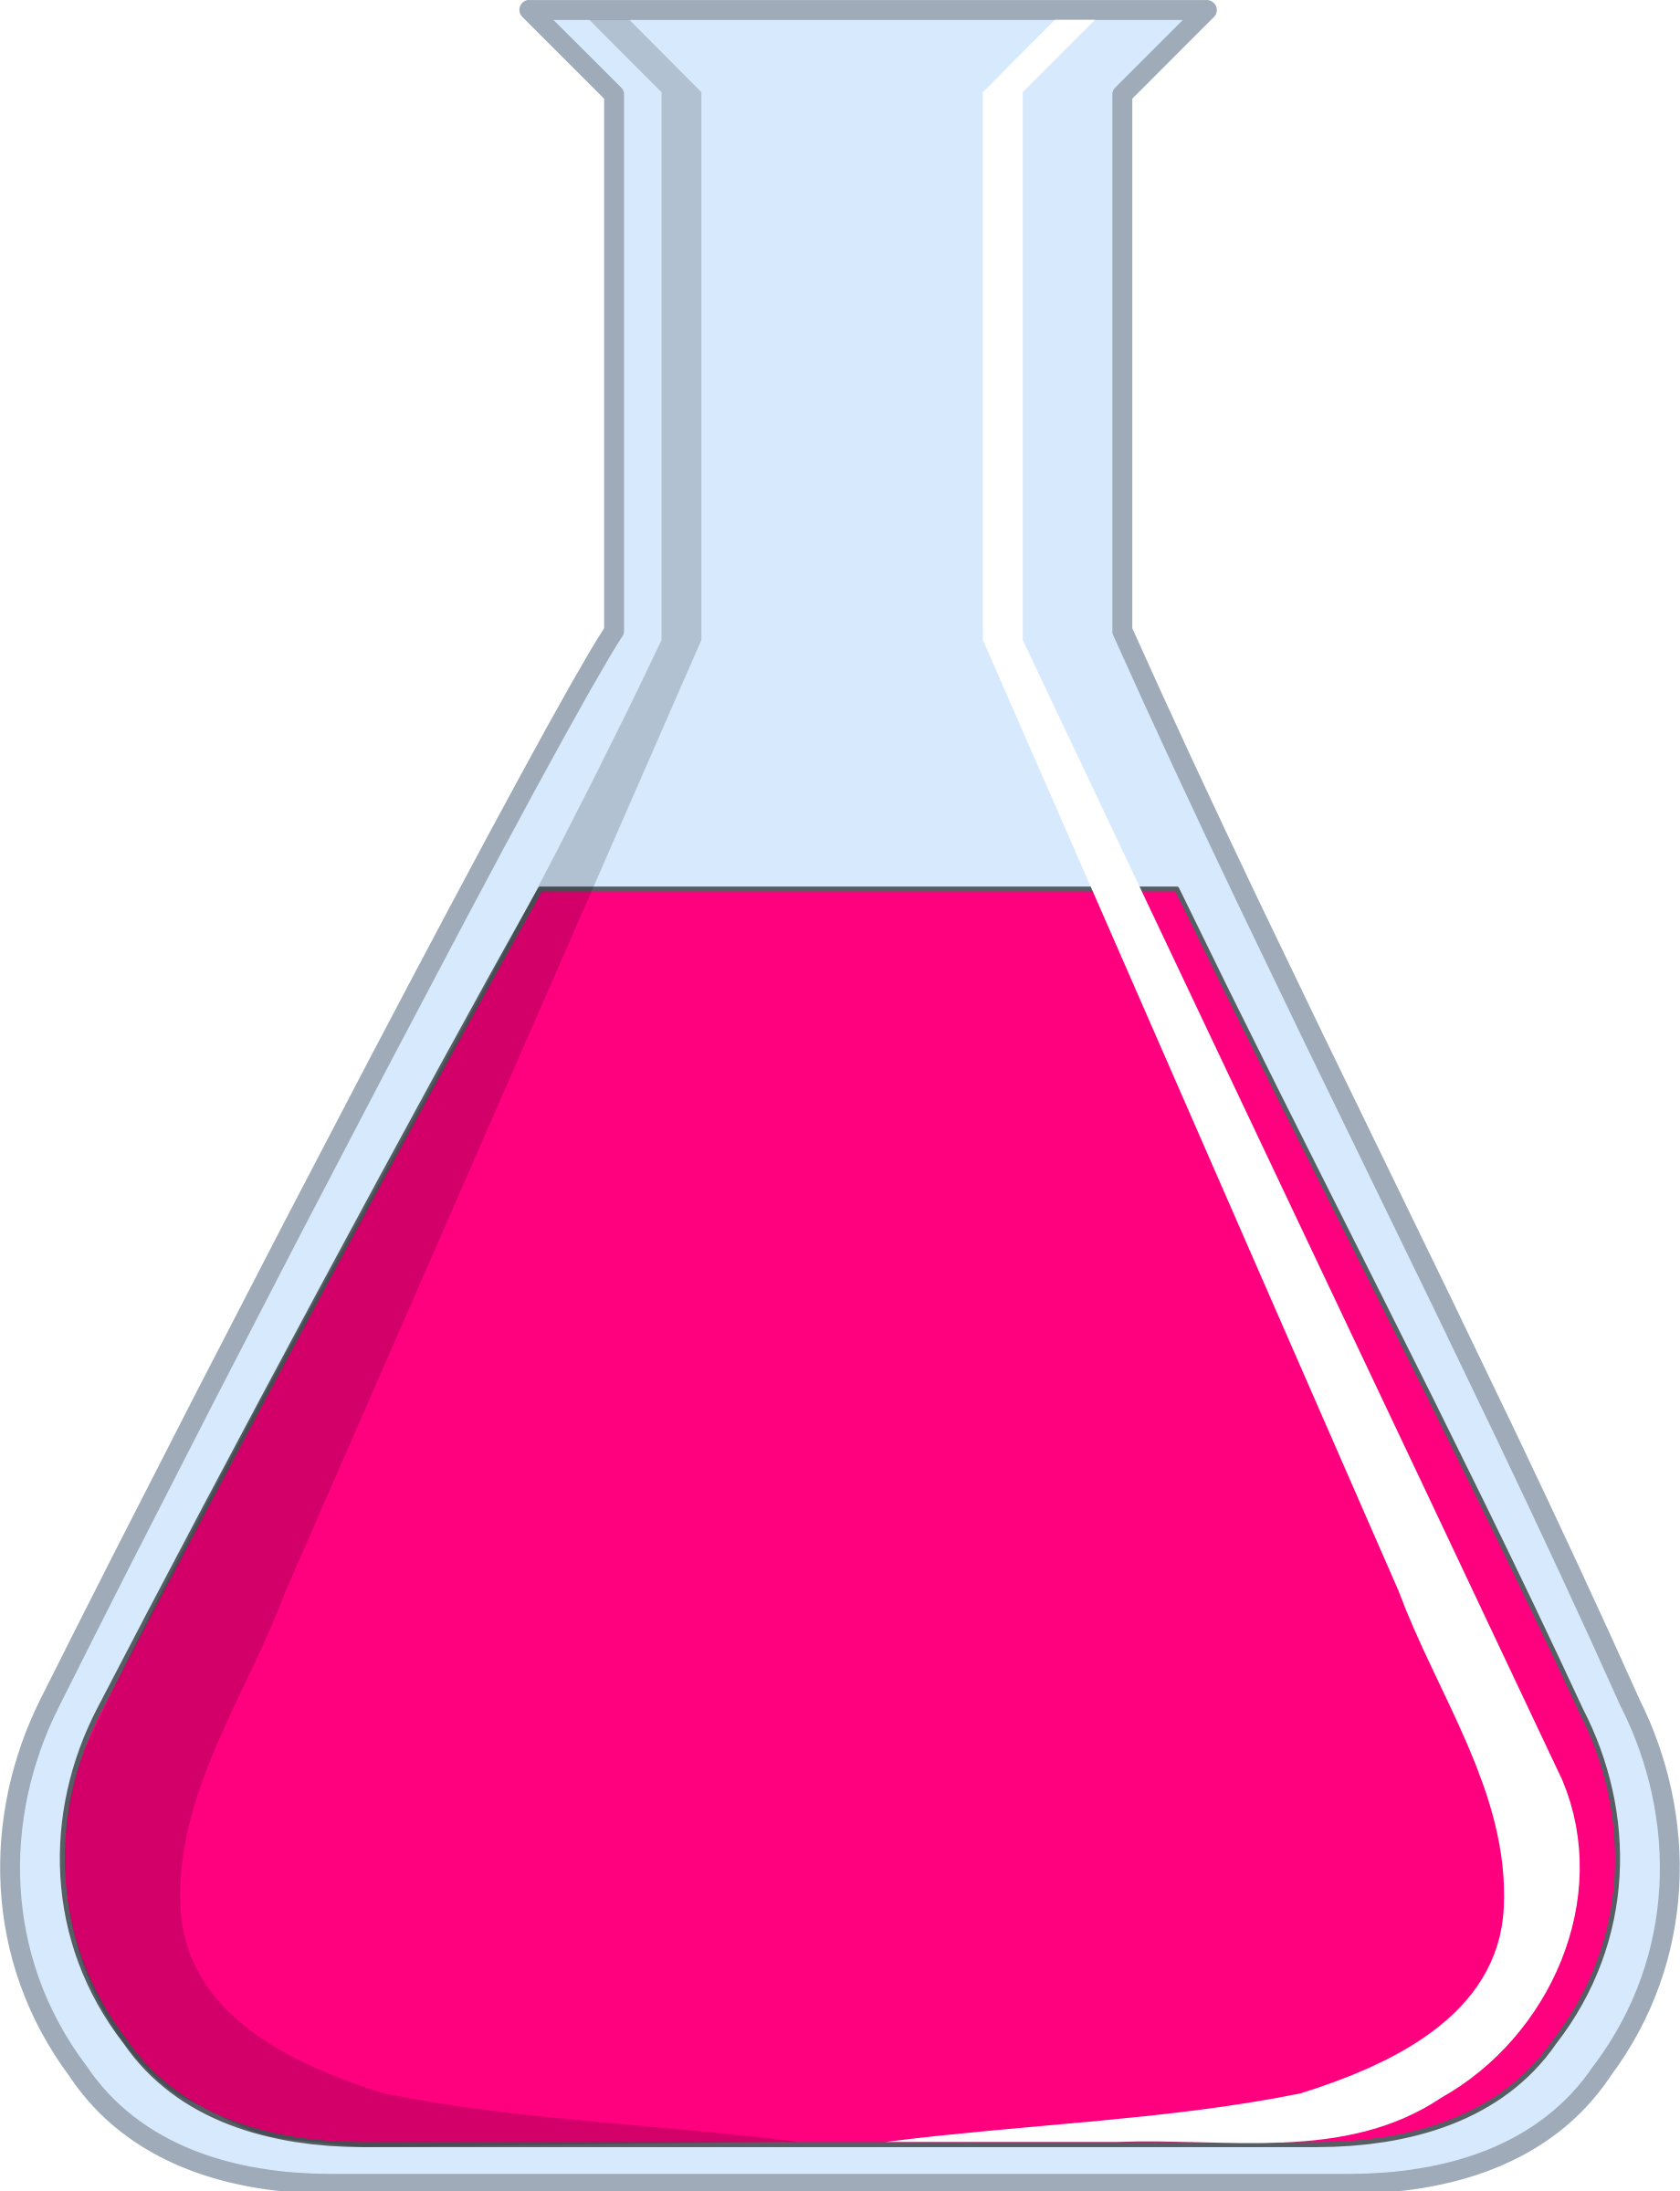 Beaker clipart pink. Test tube containing liquid